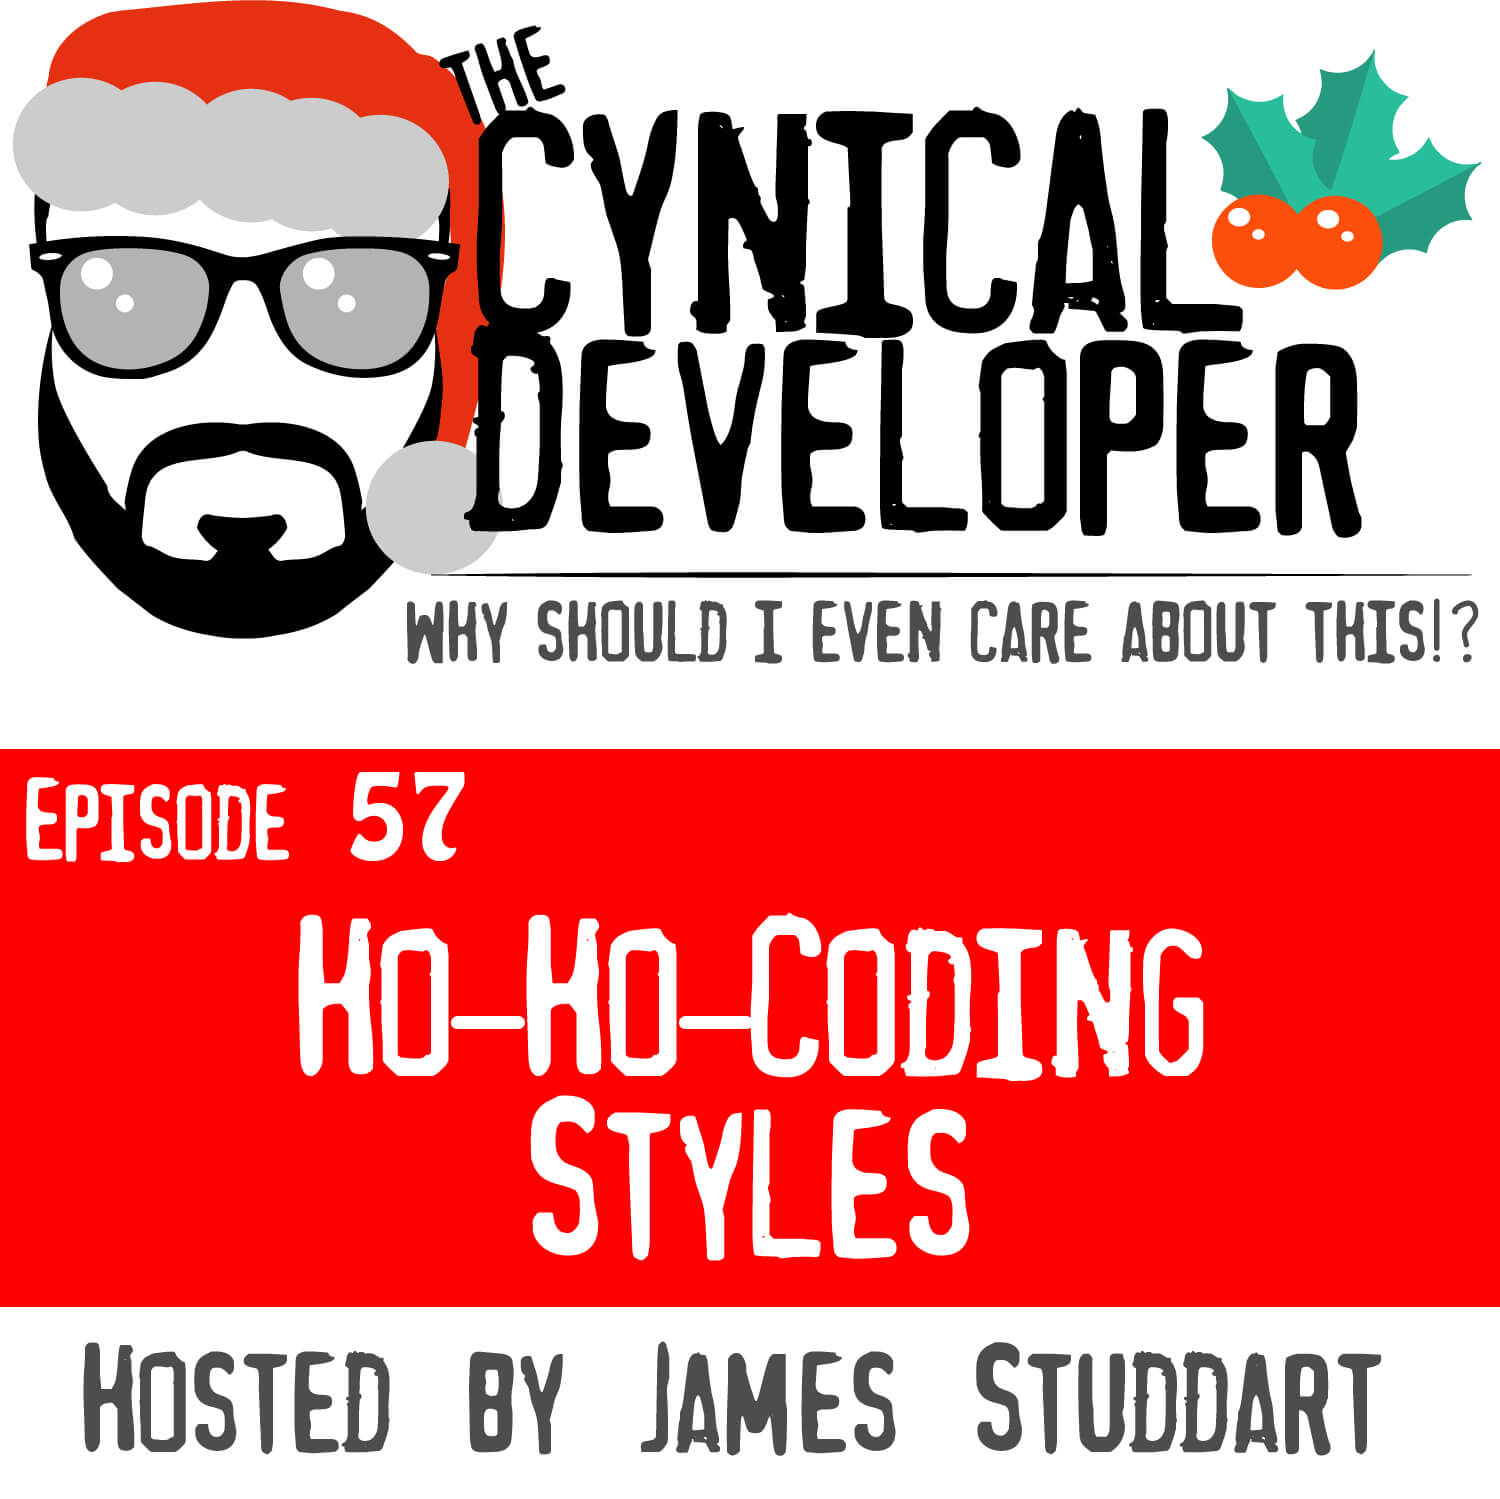 Episode 57 - Ho Ho Coding Styles!